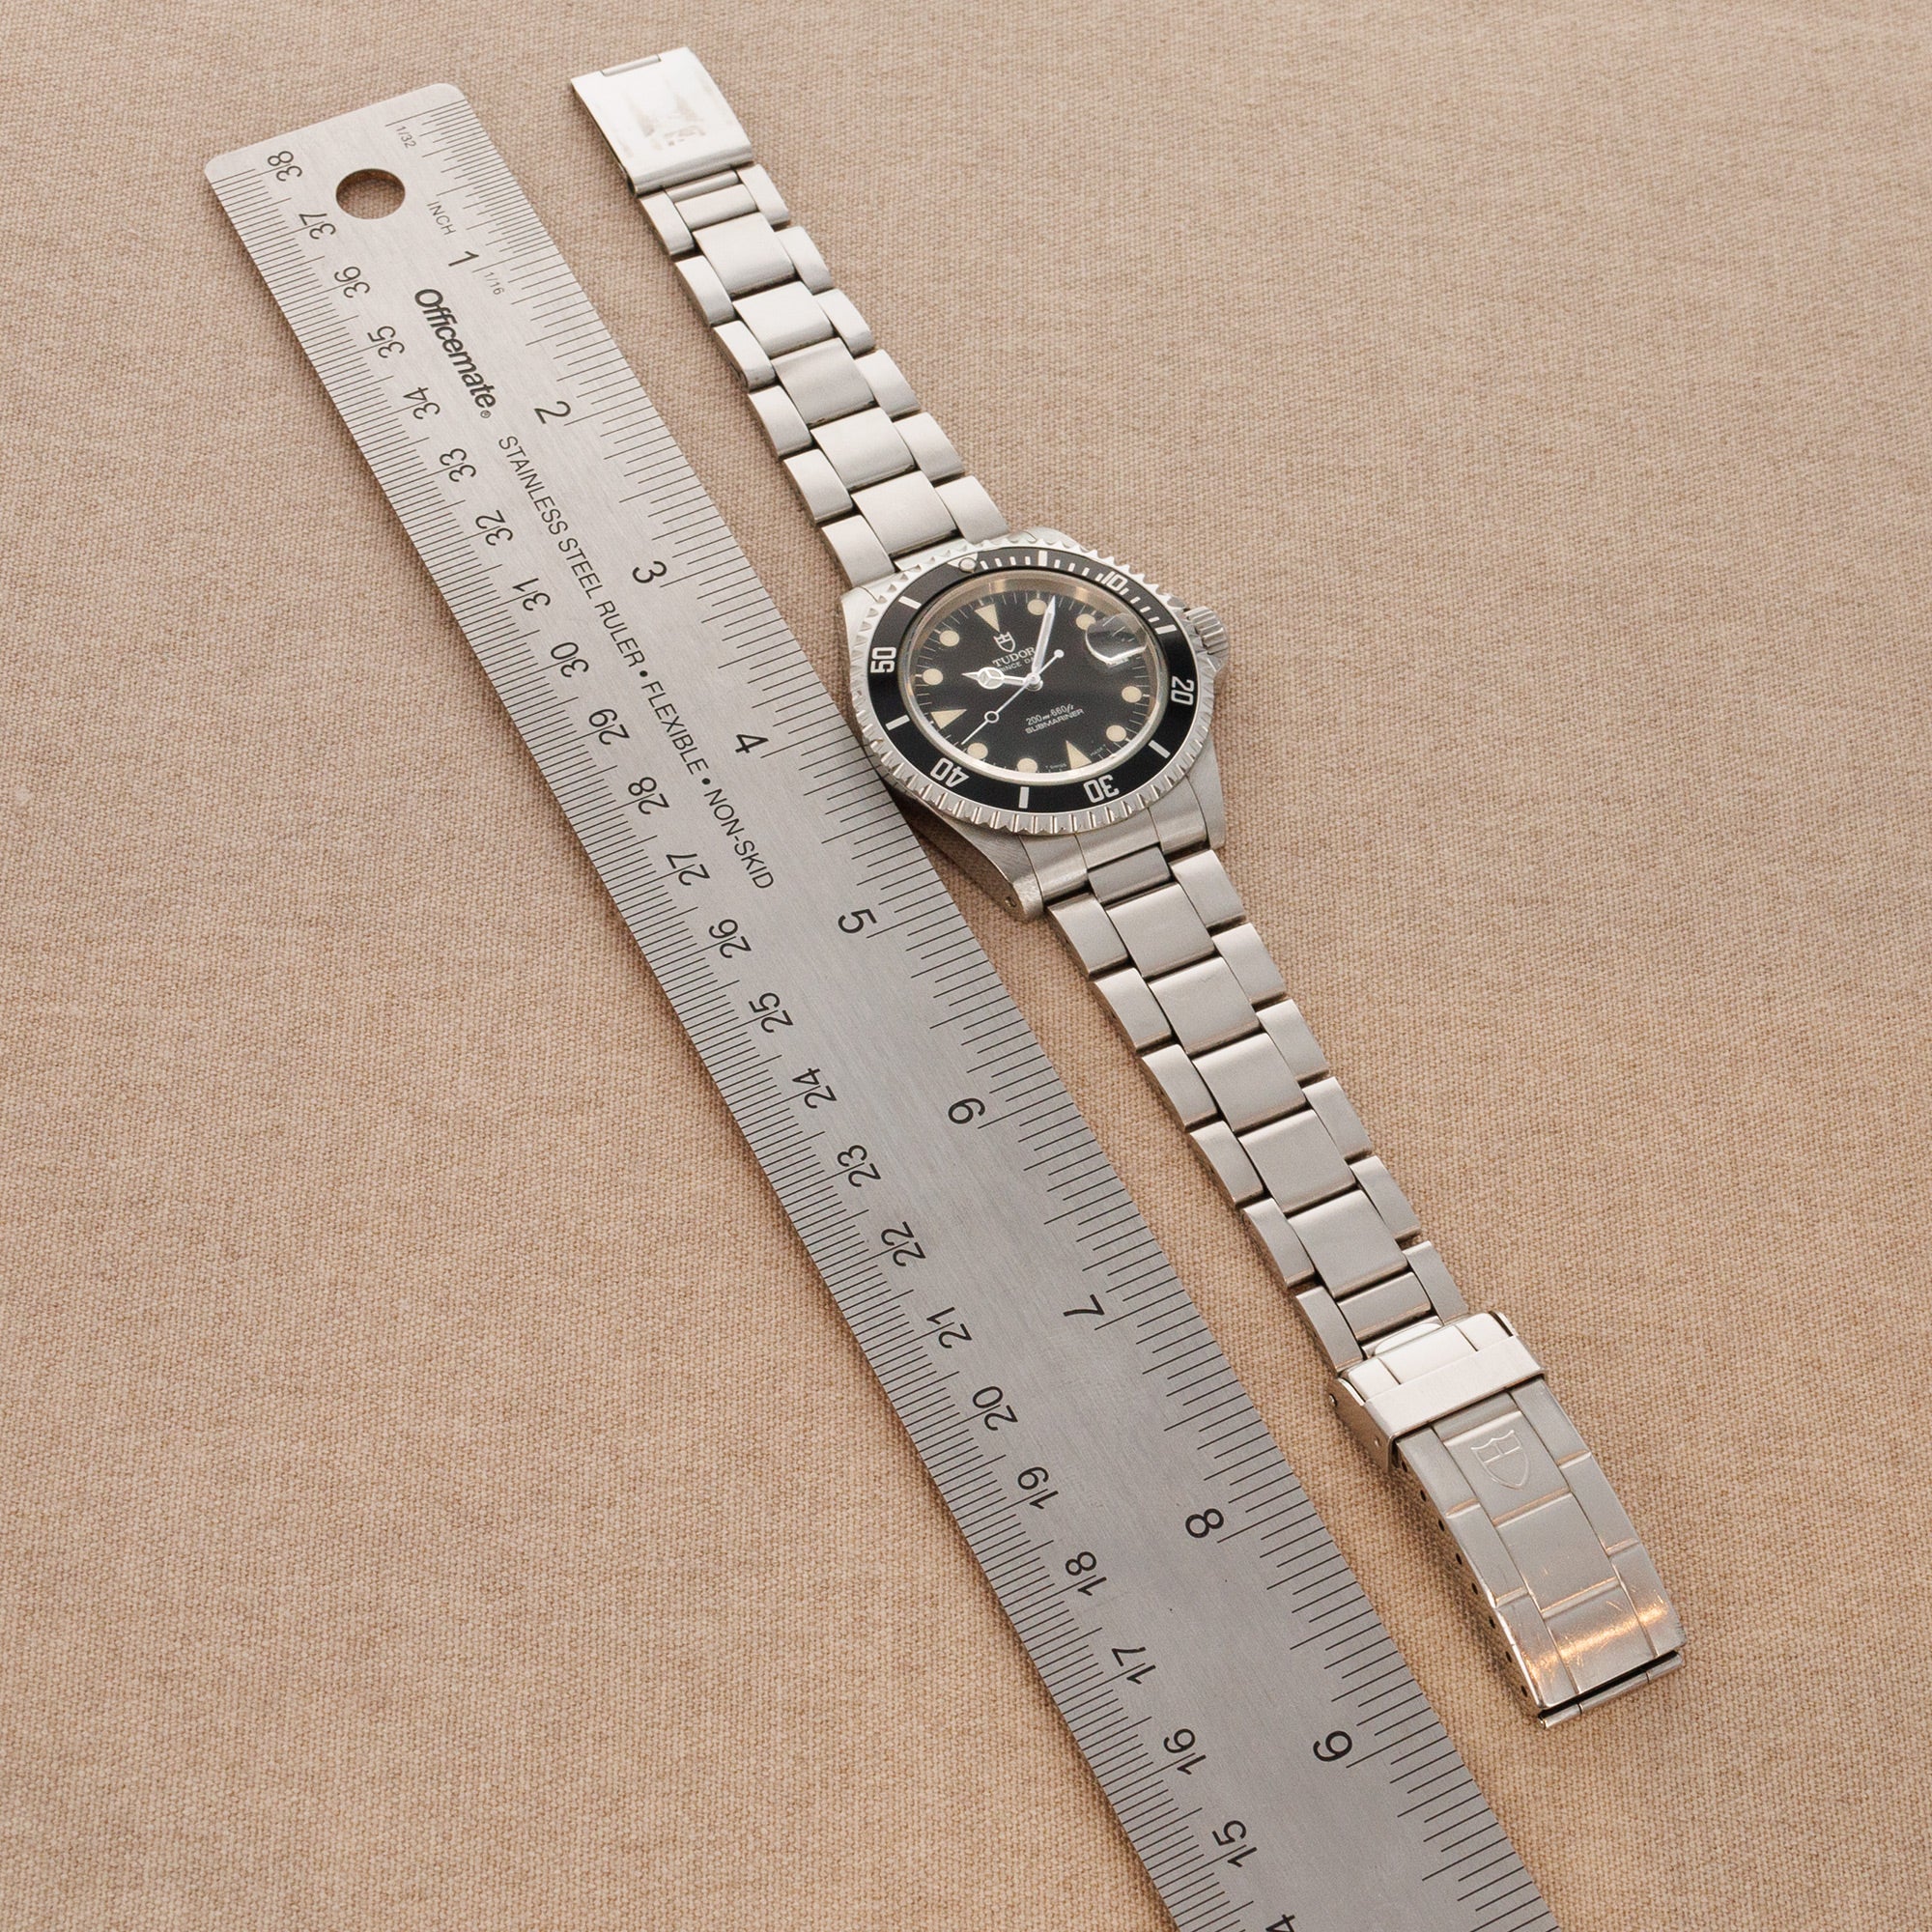 Tudor - Tudor Steel Submariner ref 79190 - The Keystone Watches